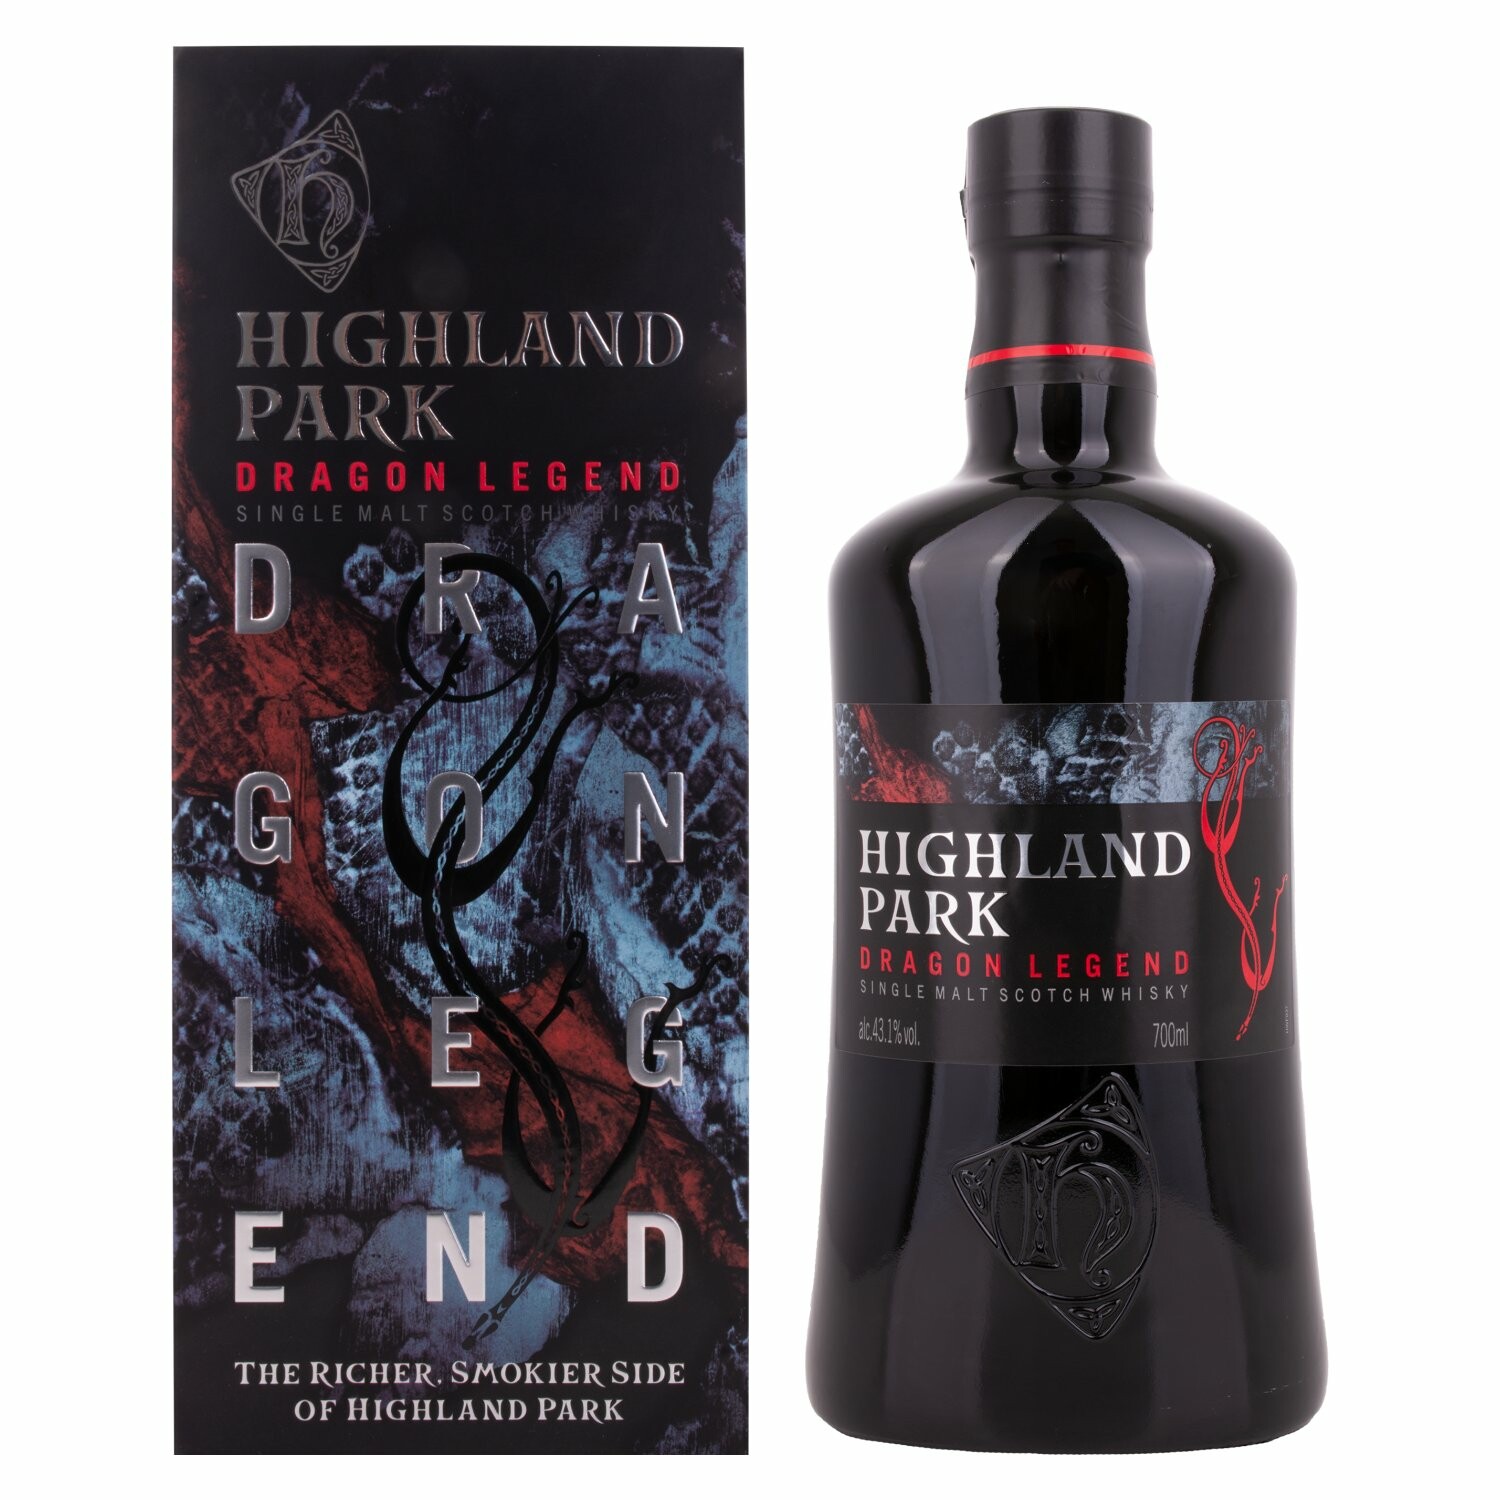 Highland Park DRAGON LEGEND Single Malt Scotch Whisky 43,1% Vol. 0,7l in Giftbox